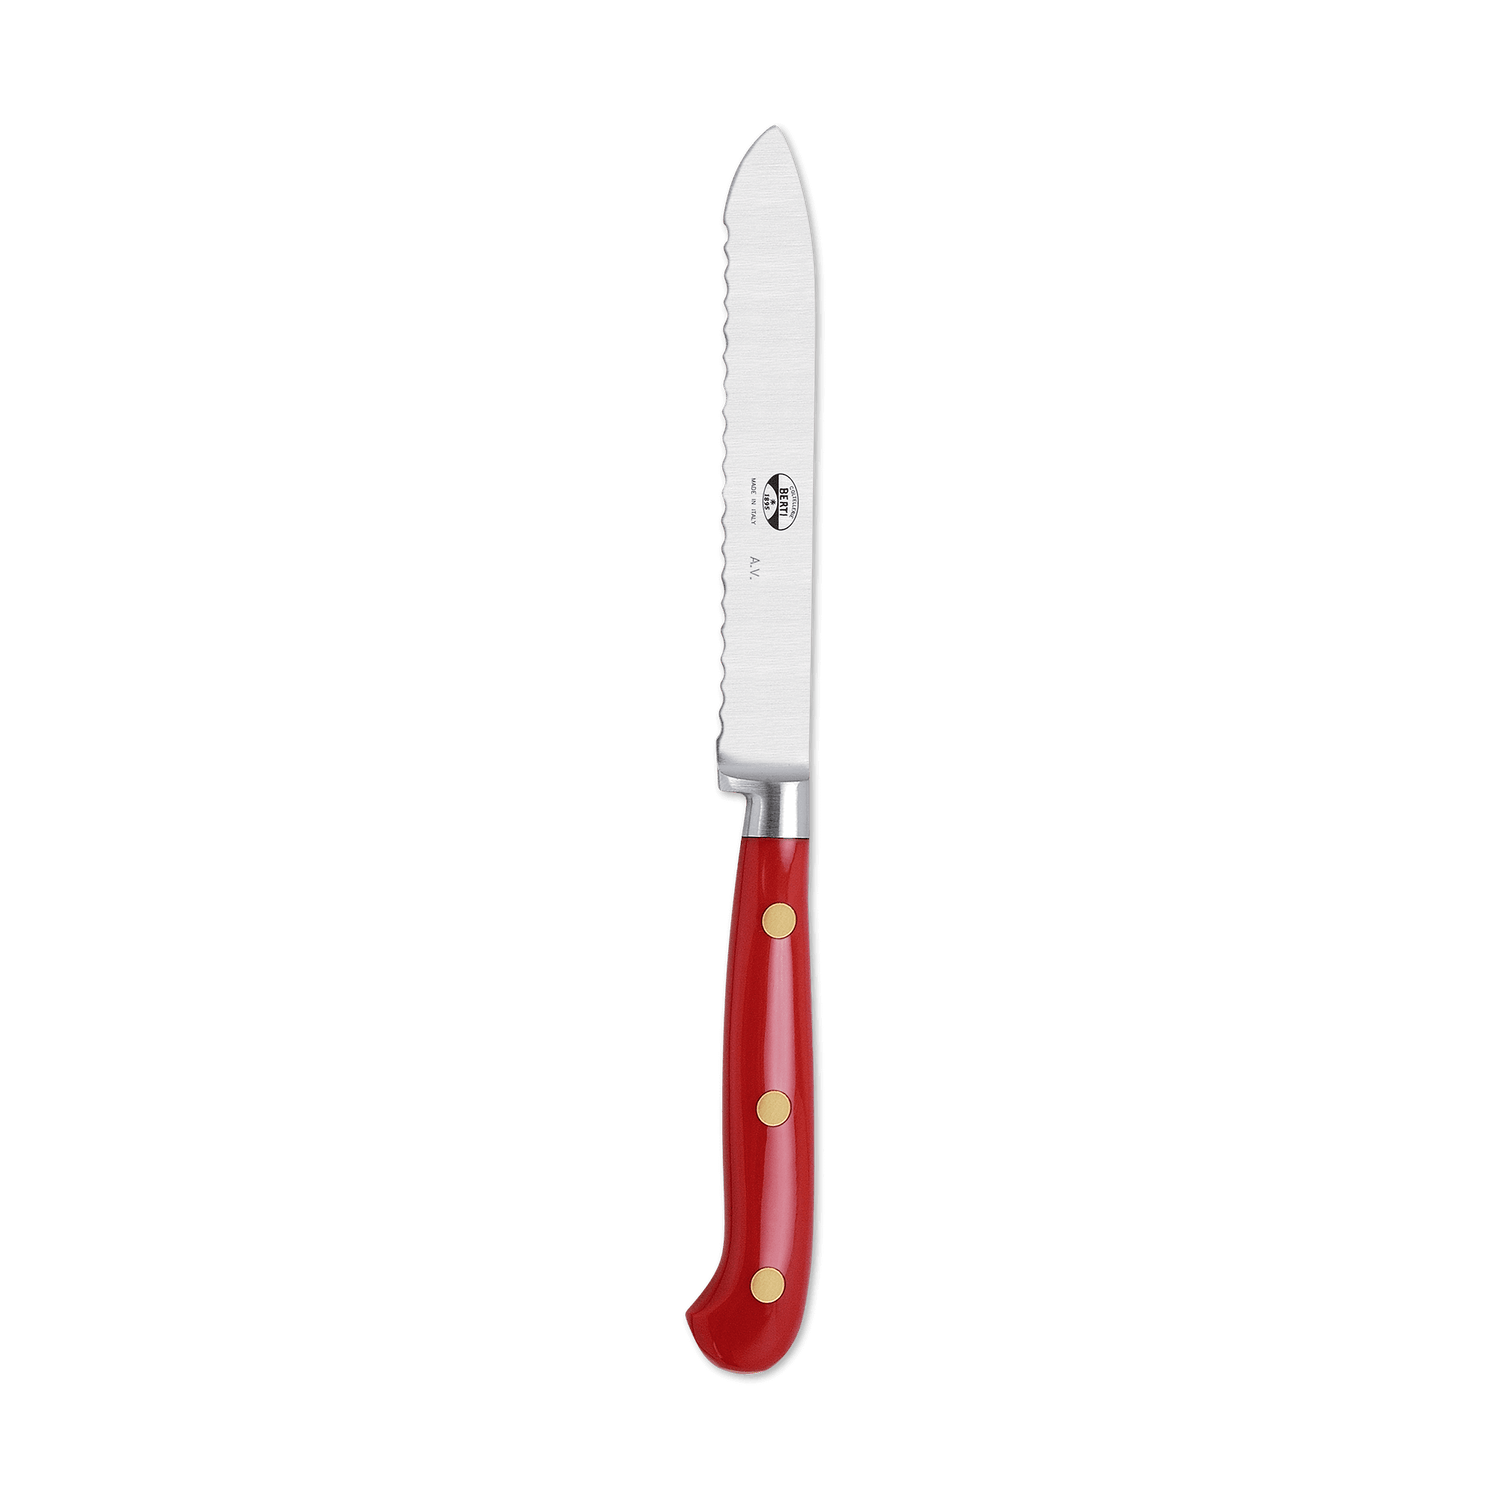 Coltellerie Berti for Match Tomato Knife - White Lucite